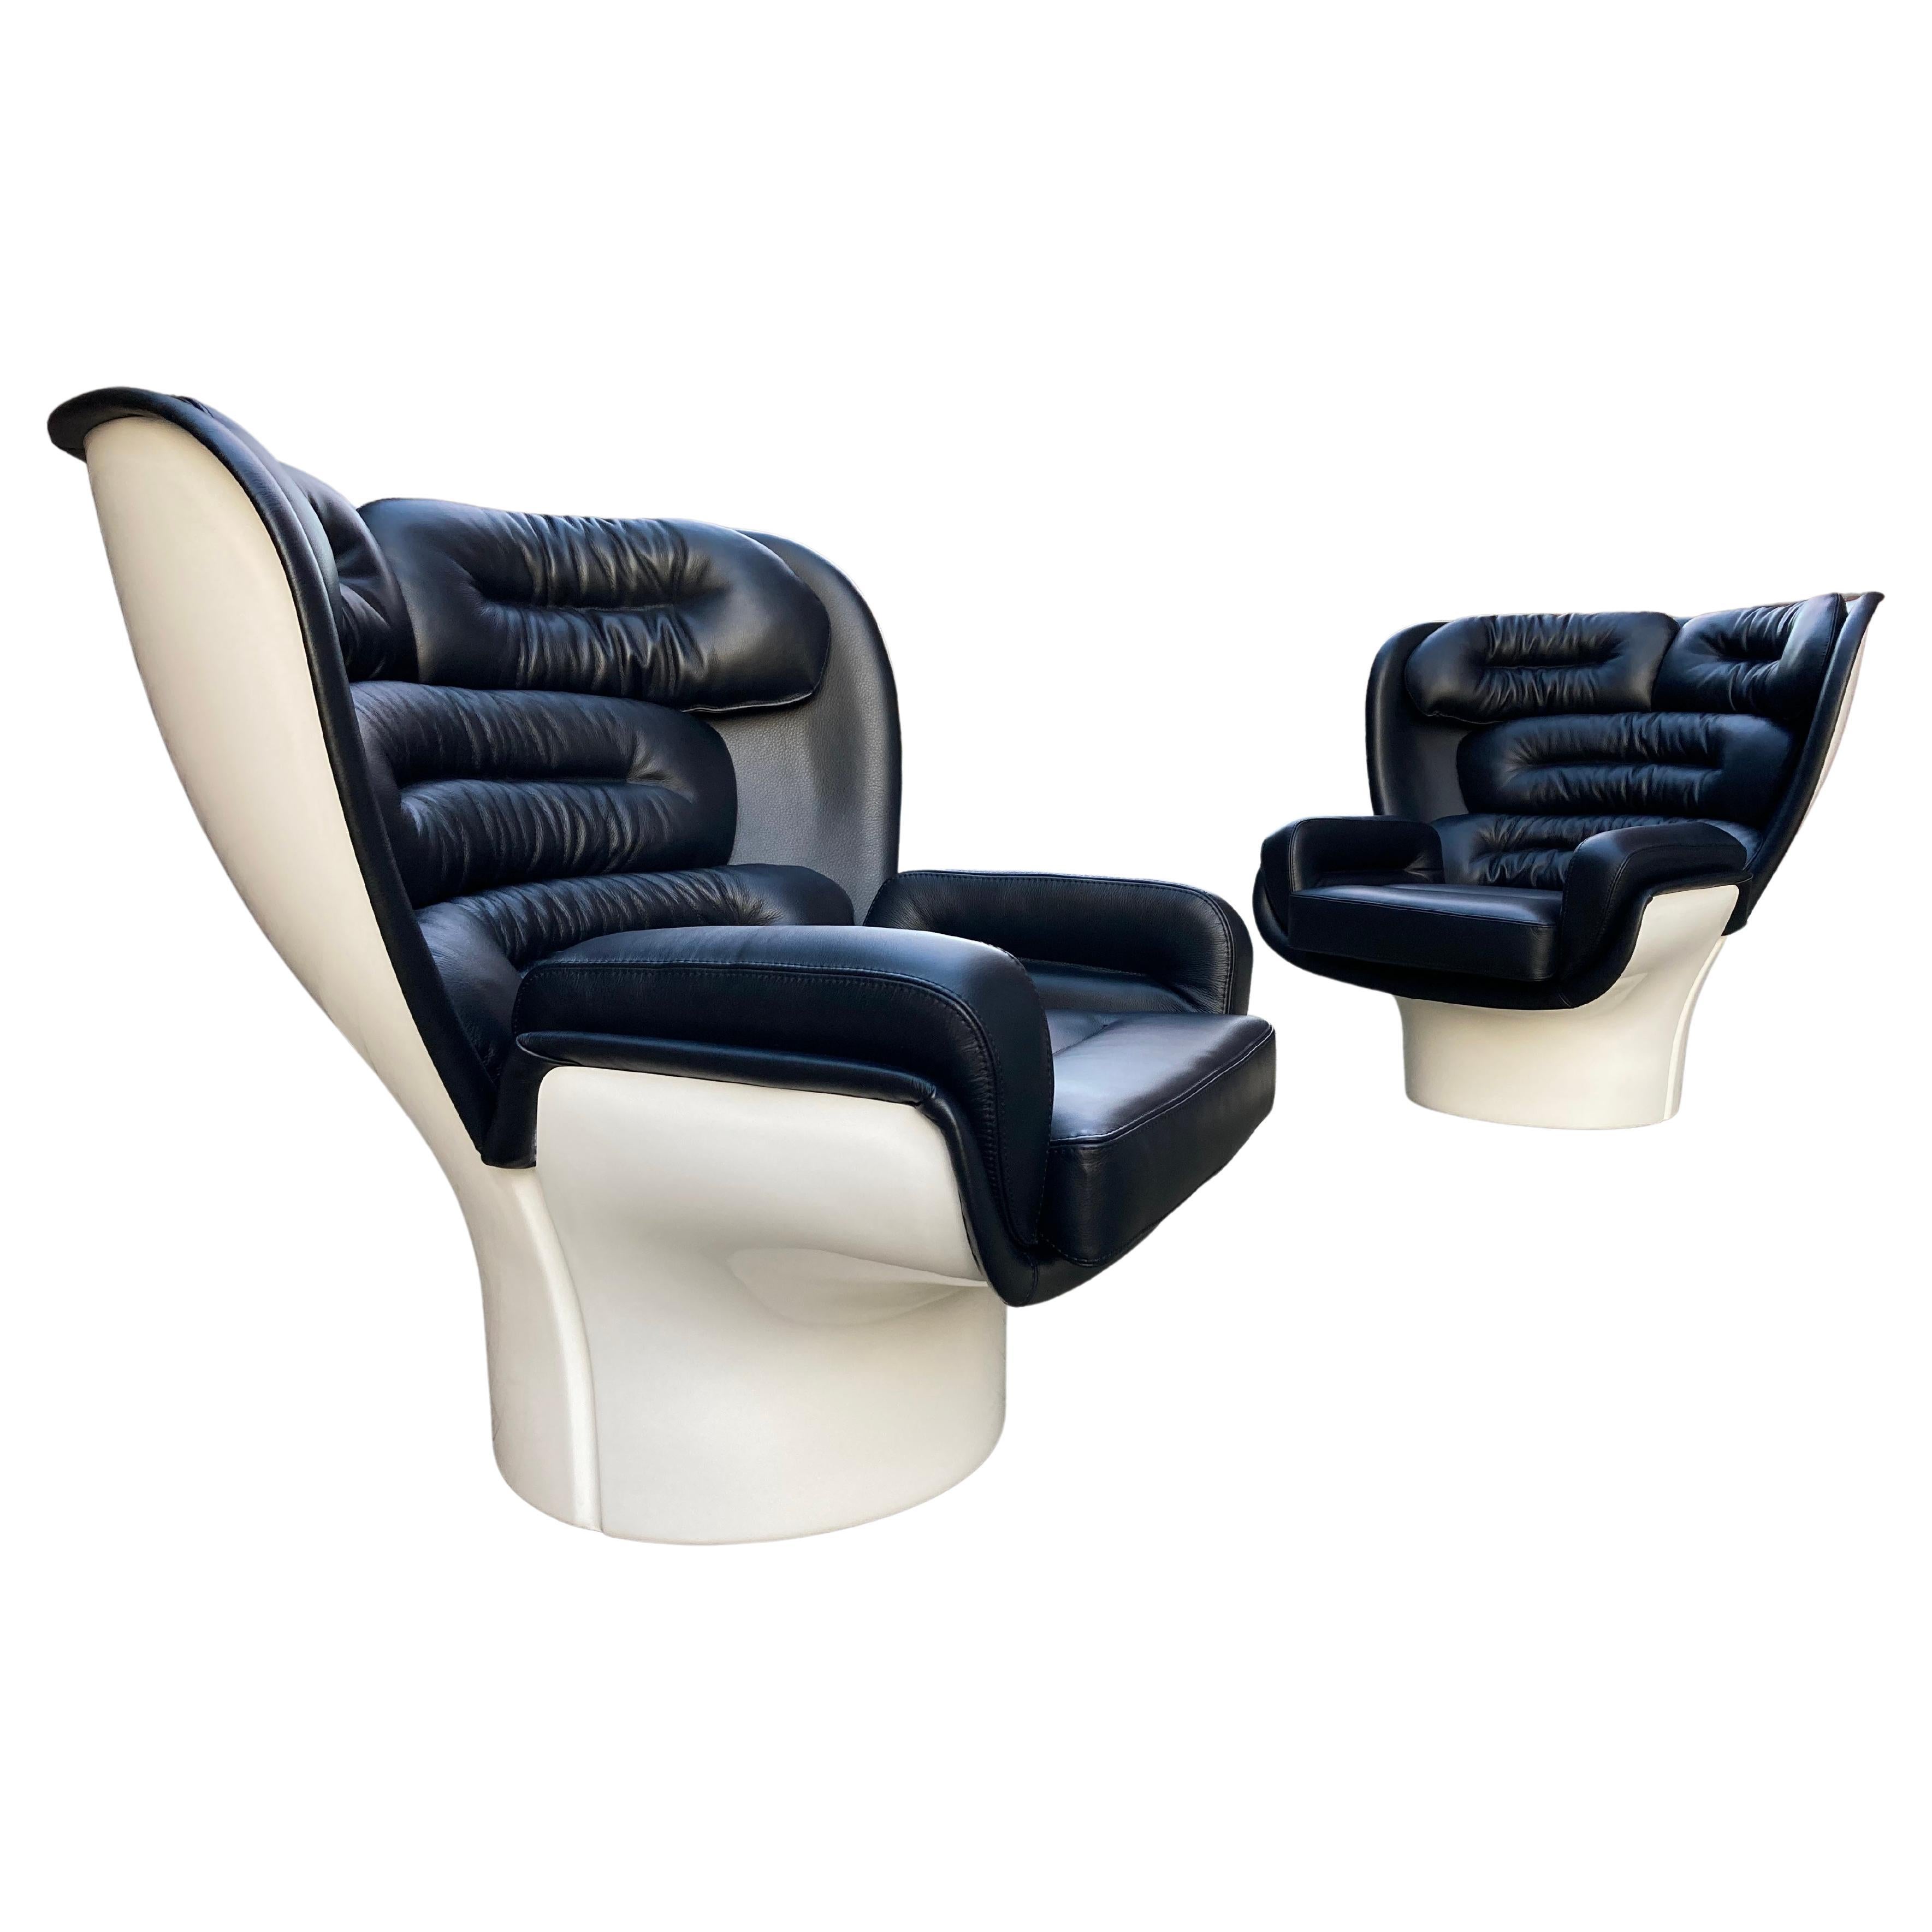 2x Joe Colombo Elda Chair, Black Leather, White Fiberglass Shell For Sale